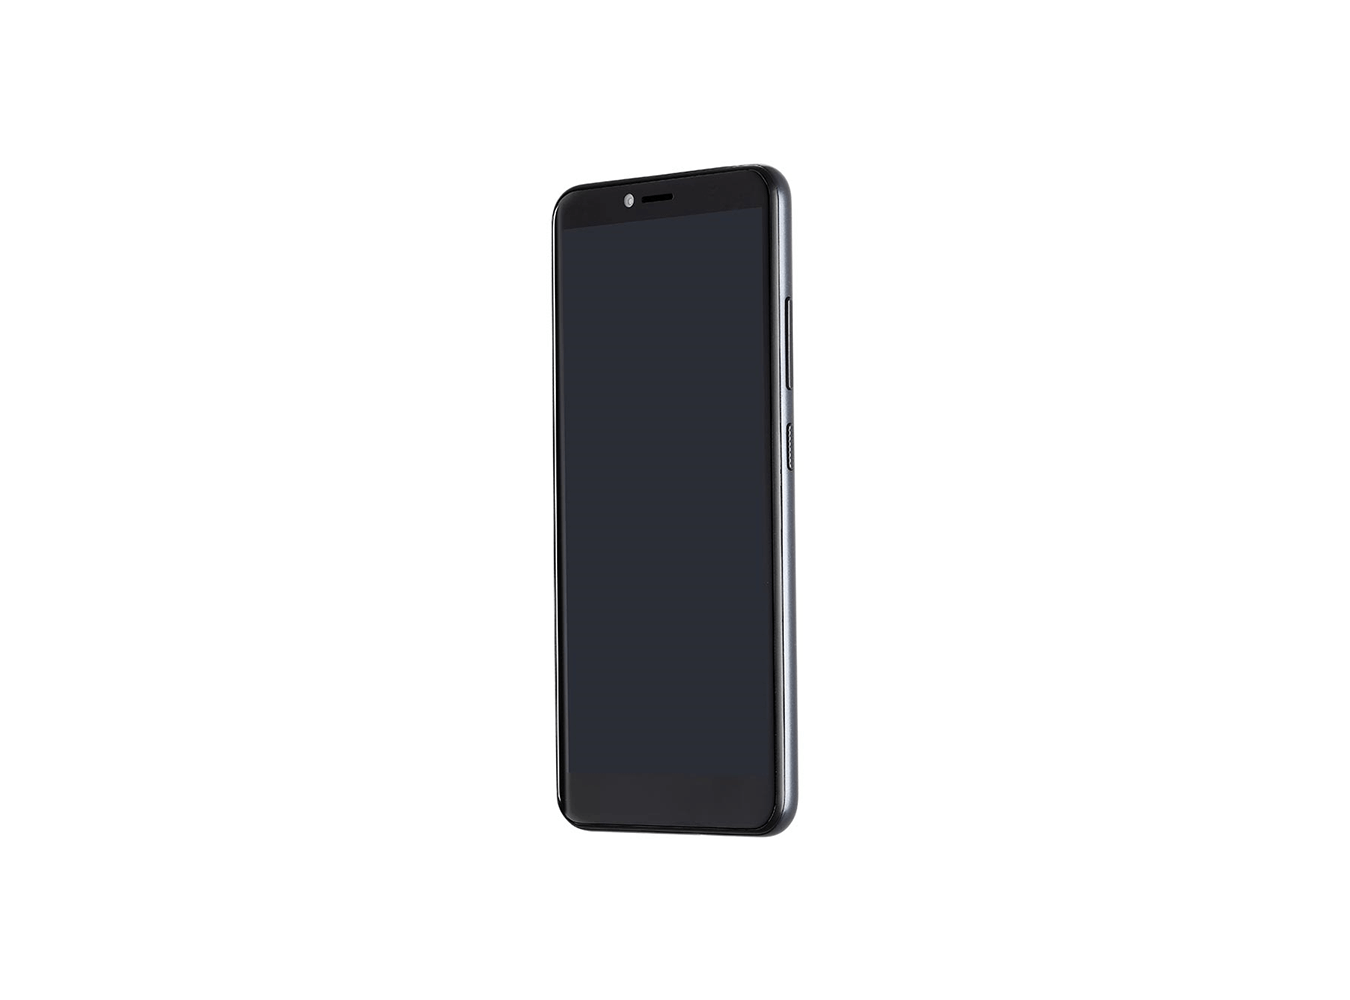 G Plus T10 16B - گوشی جی پلاس تی 10